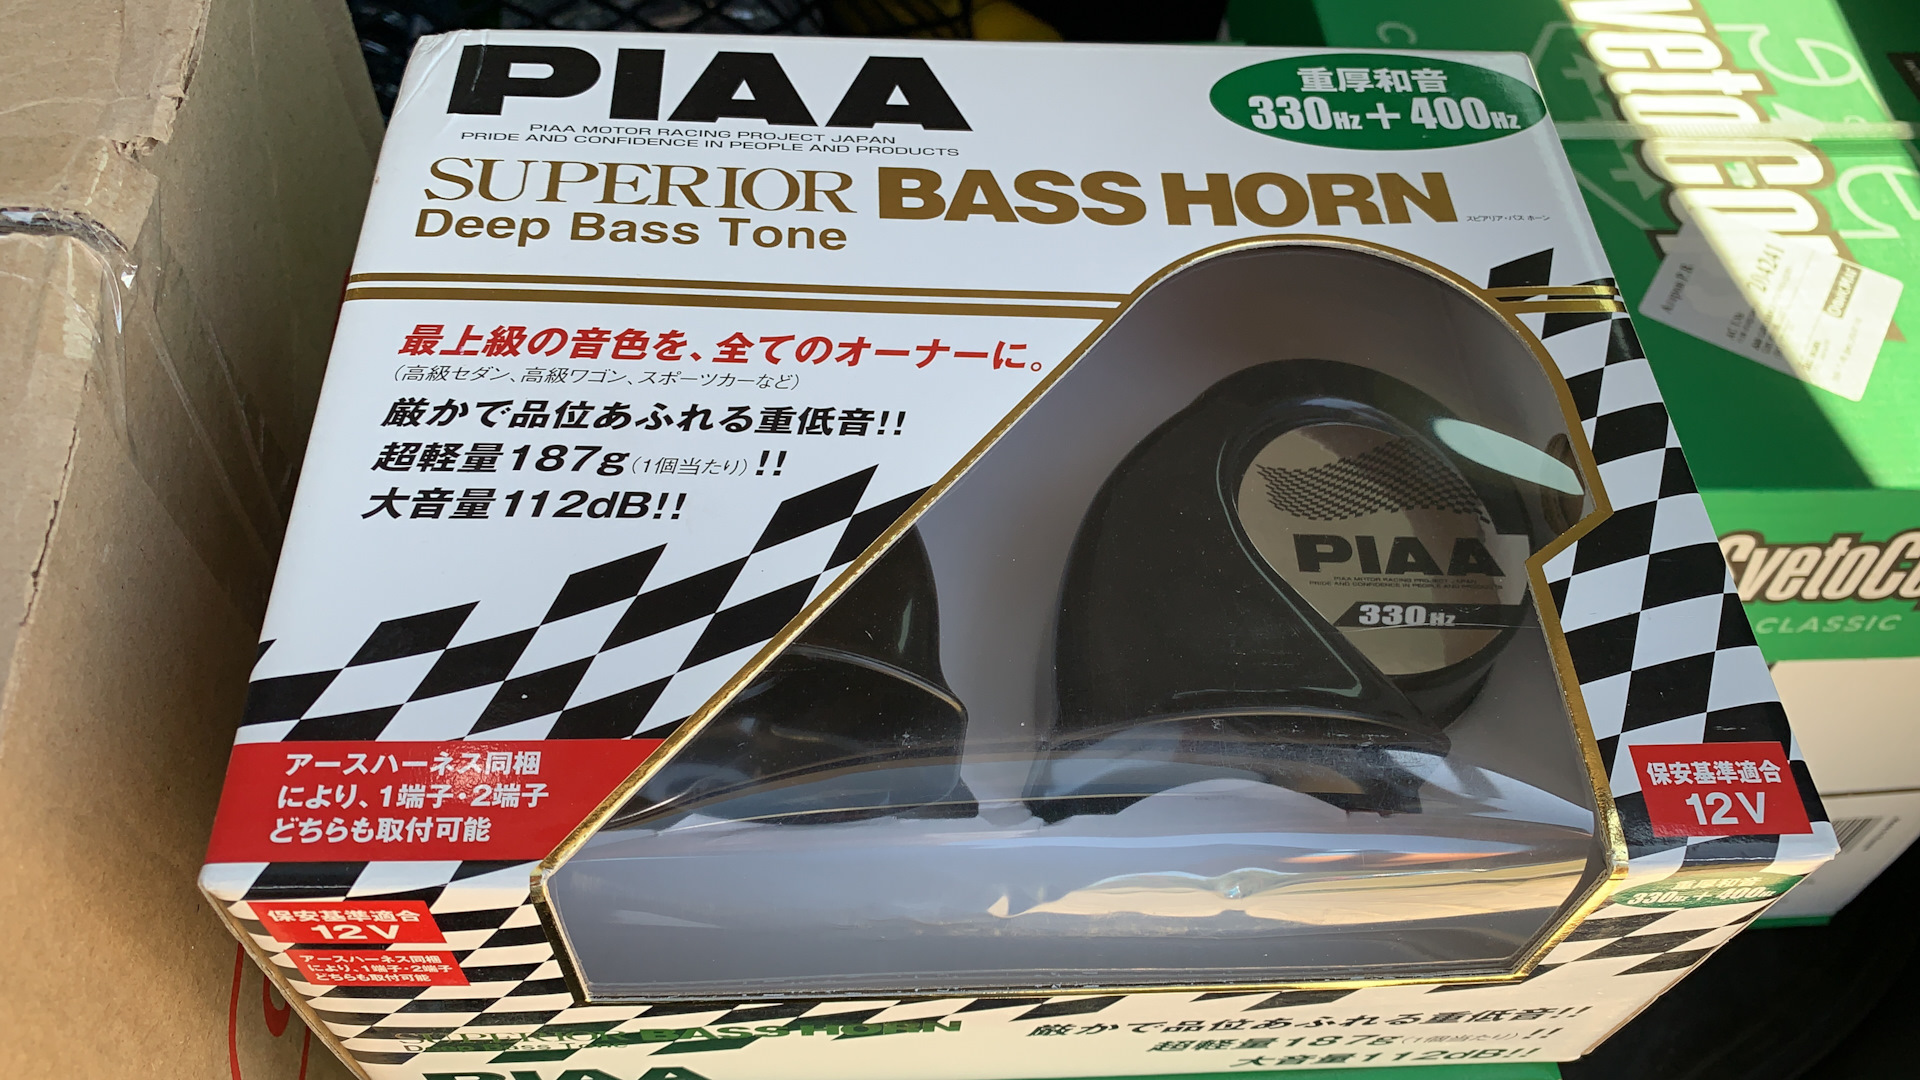 Bass horn. Сигнал Мицубиси Хорн. PIAA Superior Bass Horn ho-9 разные упаковки. PIAA логотип. PIAA Bass Horn купить.